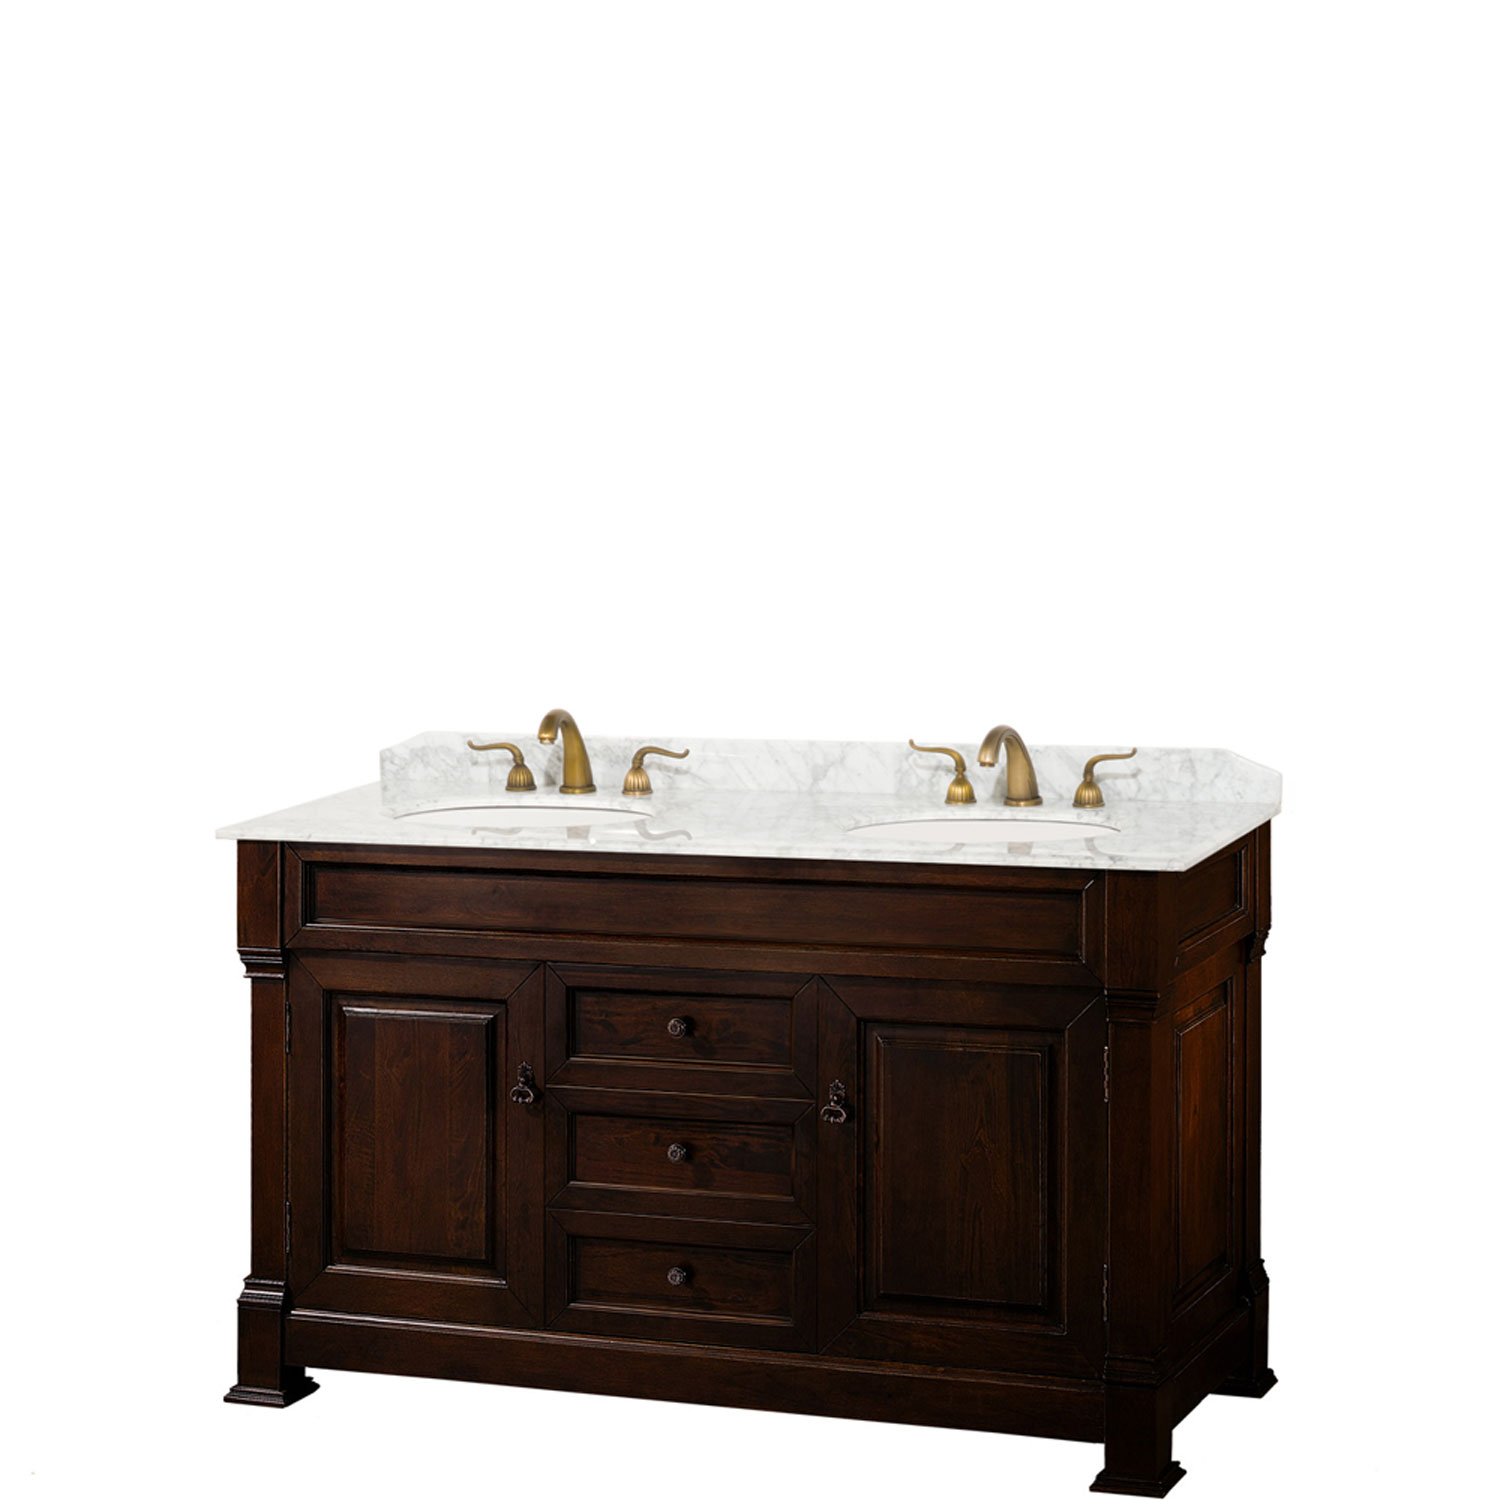 Andover 60 Traditional Bathroom Double, Cherry Wood Vanity Set